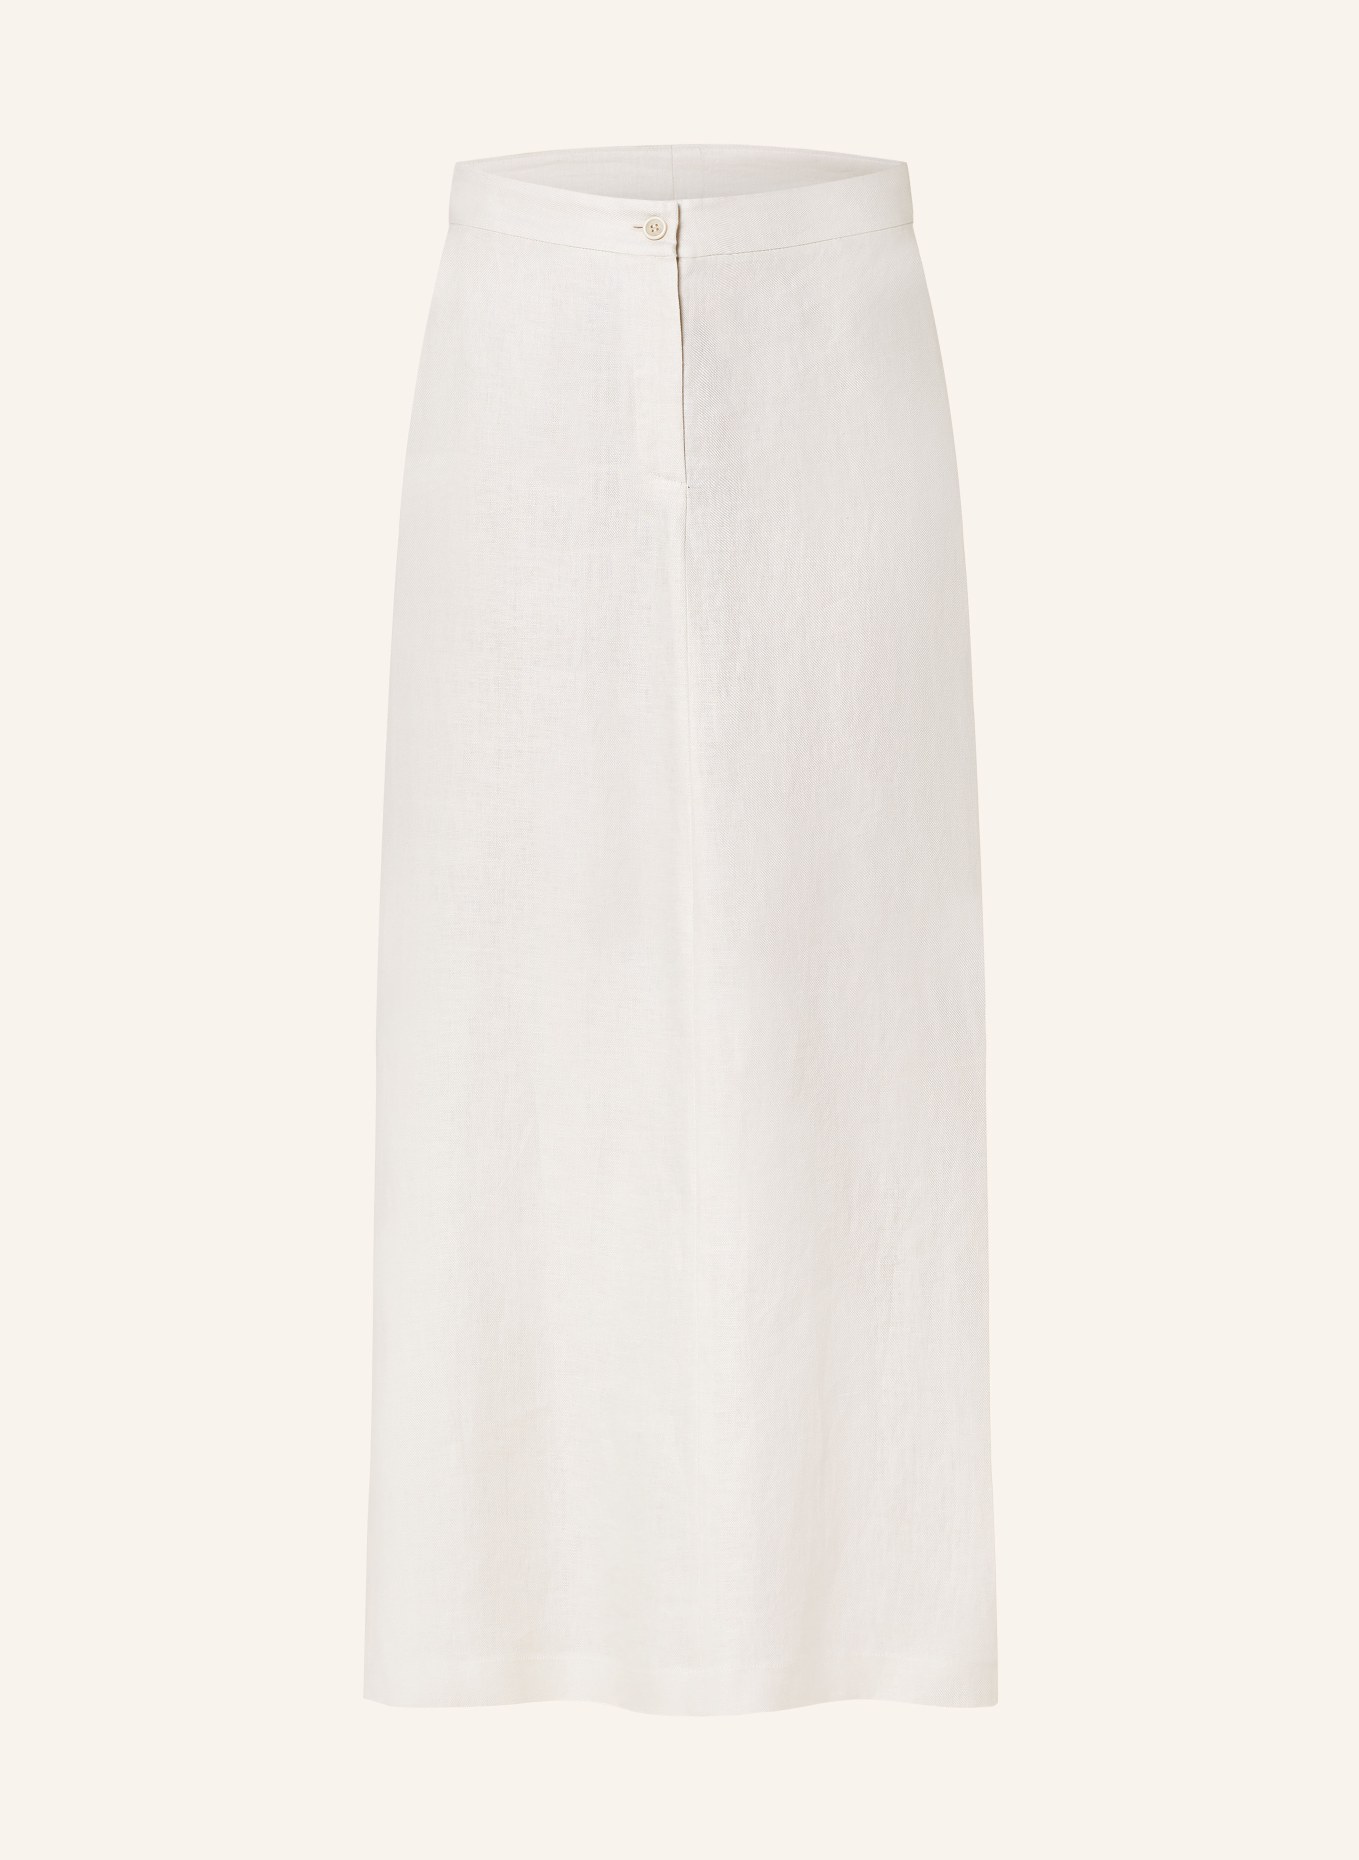 ANTONELLI firenze Linen skirt IPPOLITO, Color: CREAM (Image 1)